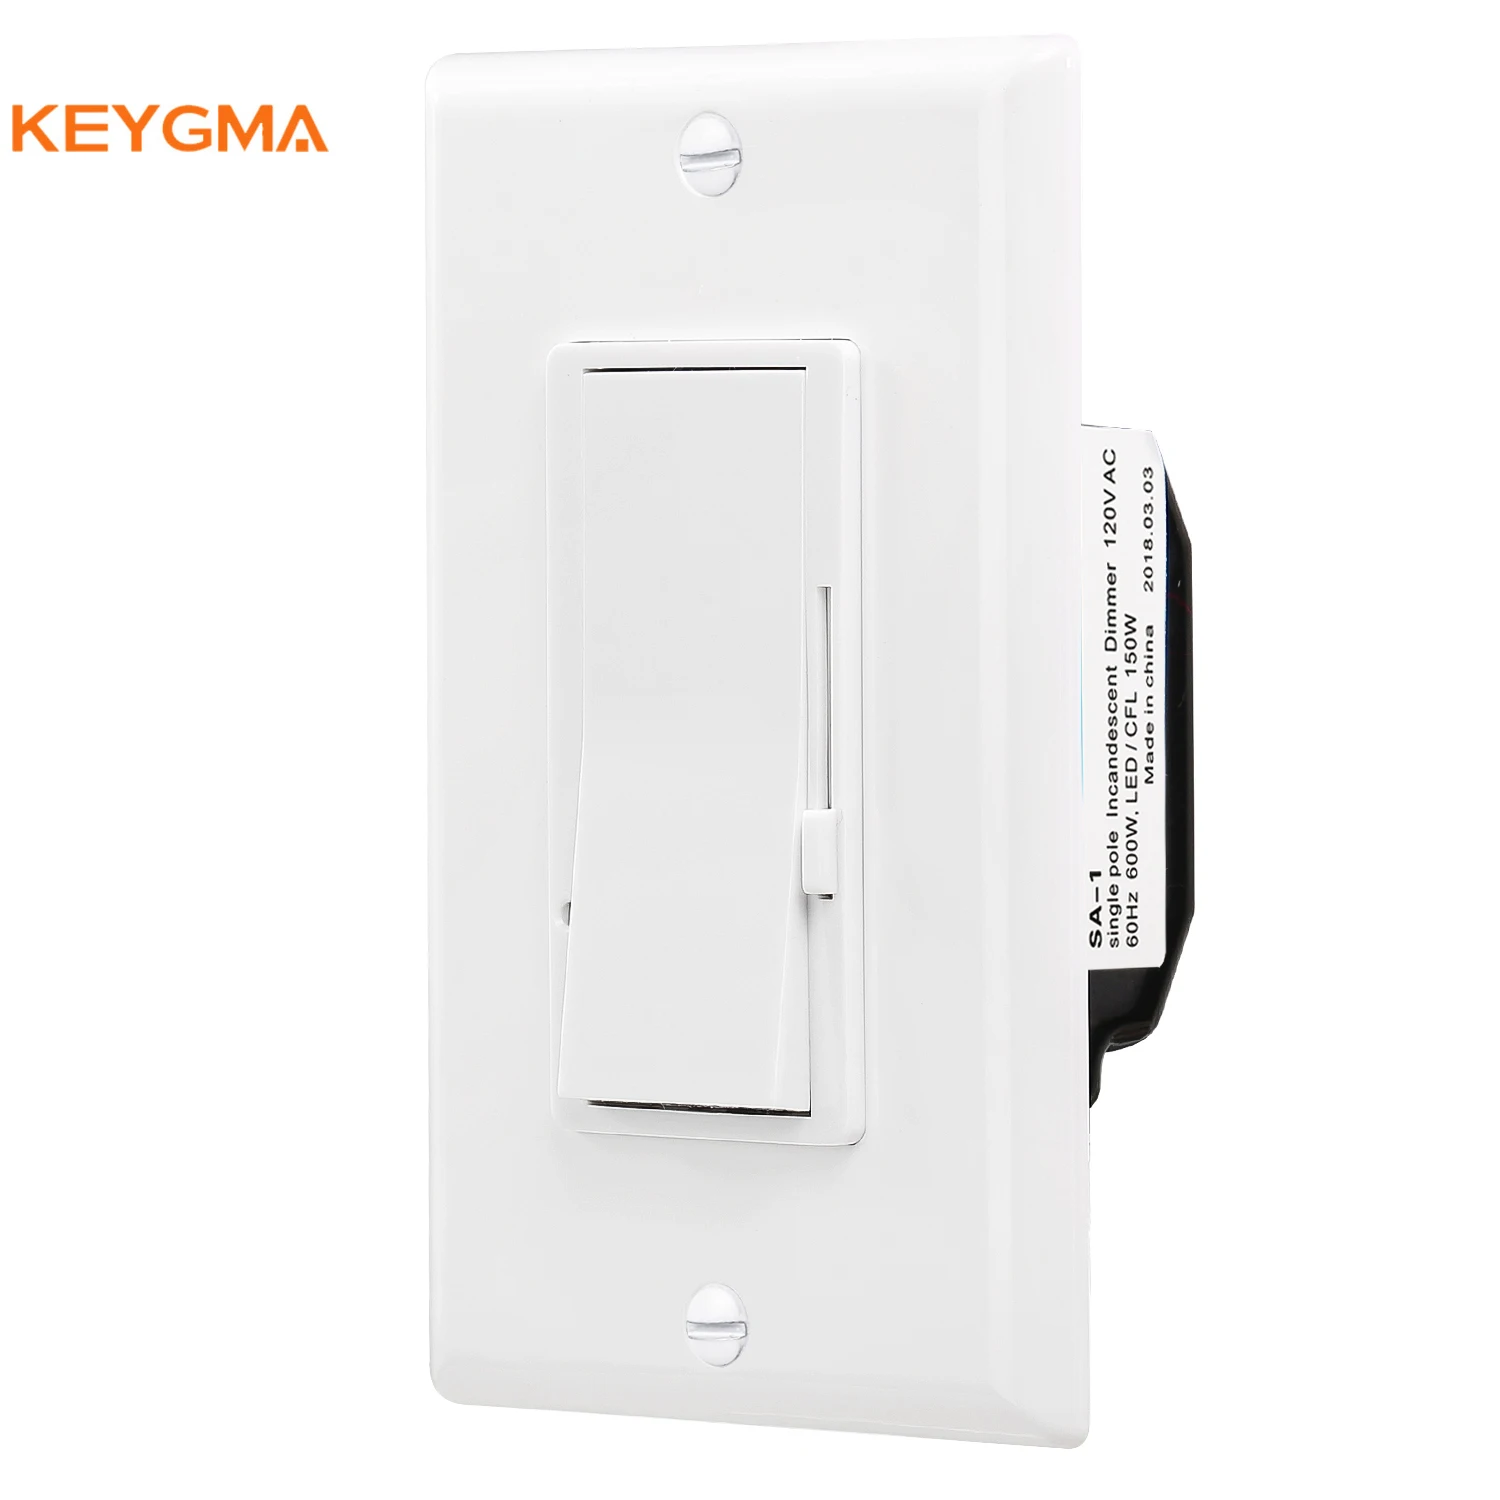 Keygma hot sale ETL listed 3 way USA standard smart LED  light dimmer switch